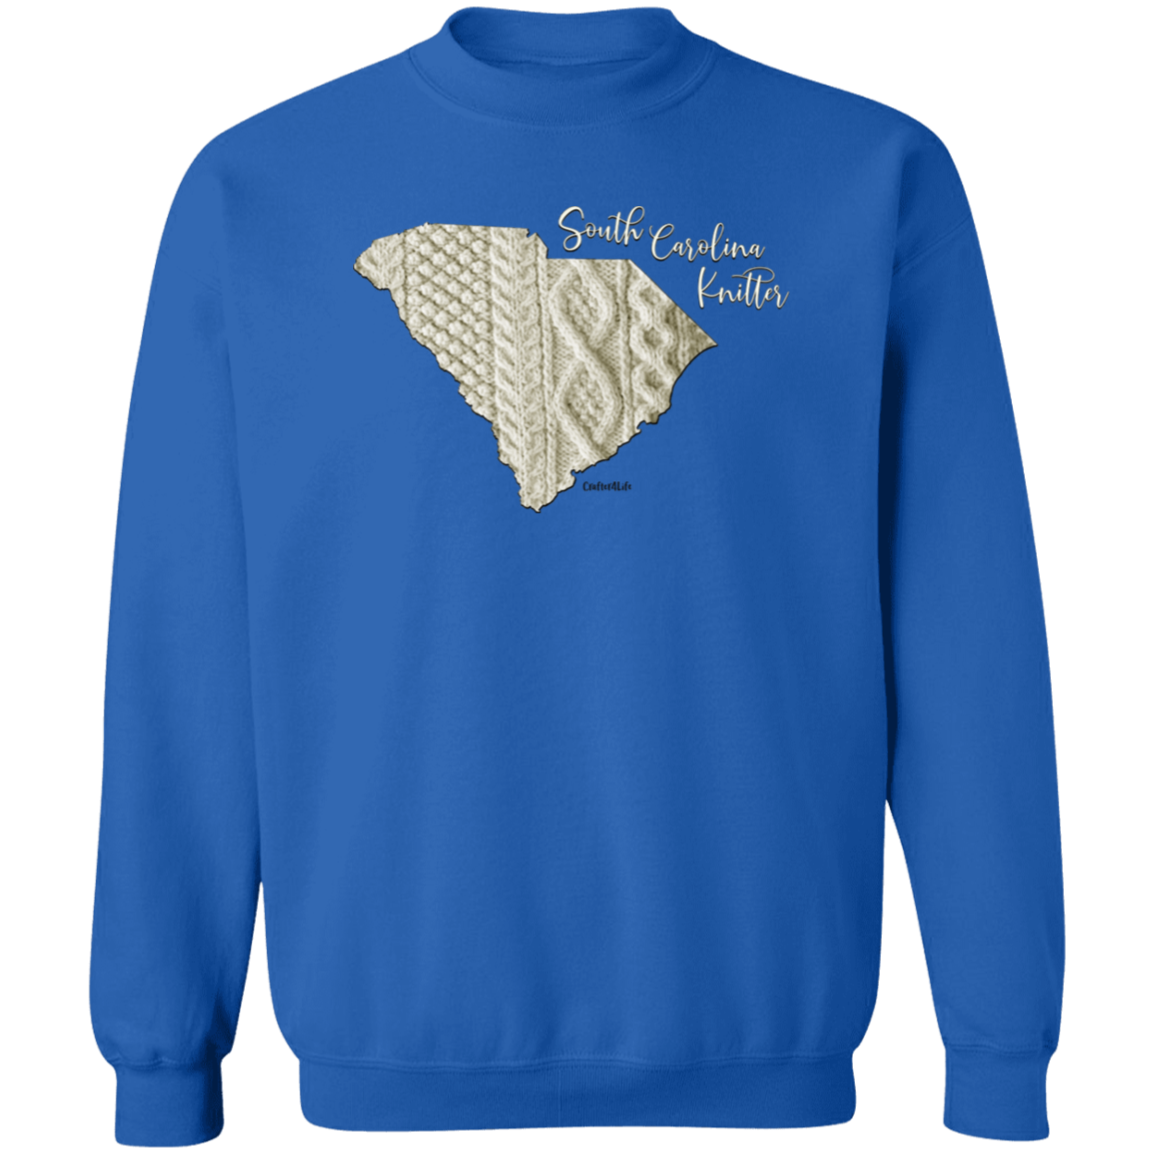 South Carolina Knitter Crewneck Pullover Sweatshirt